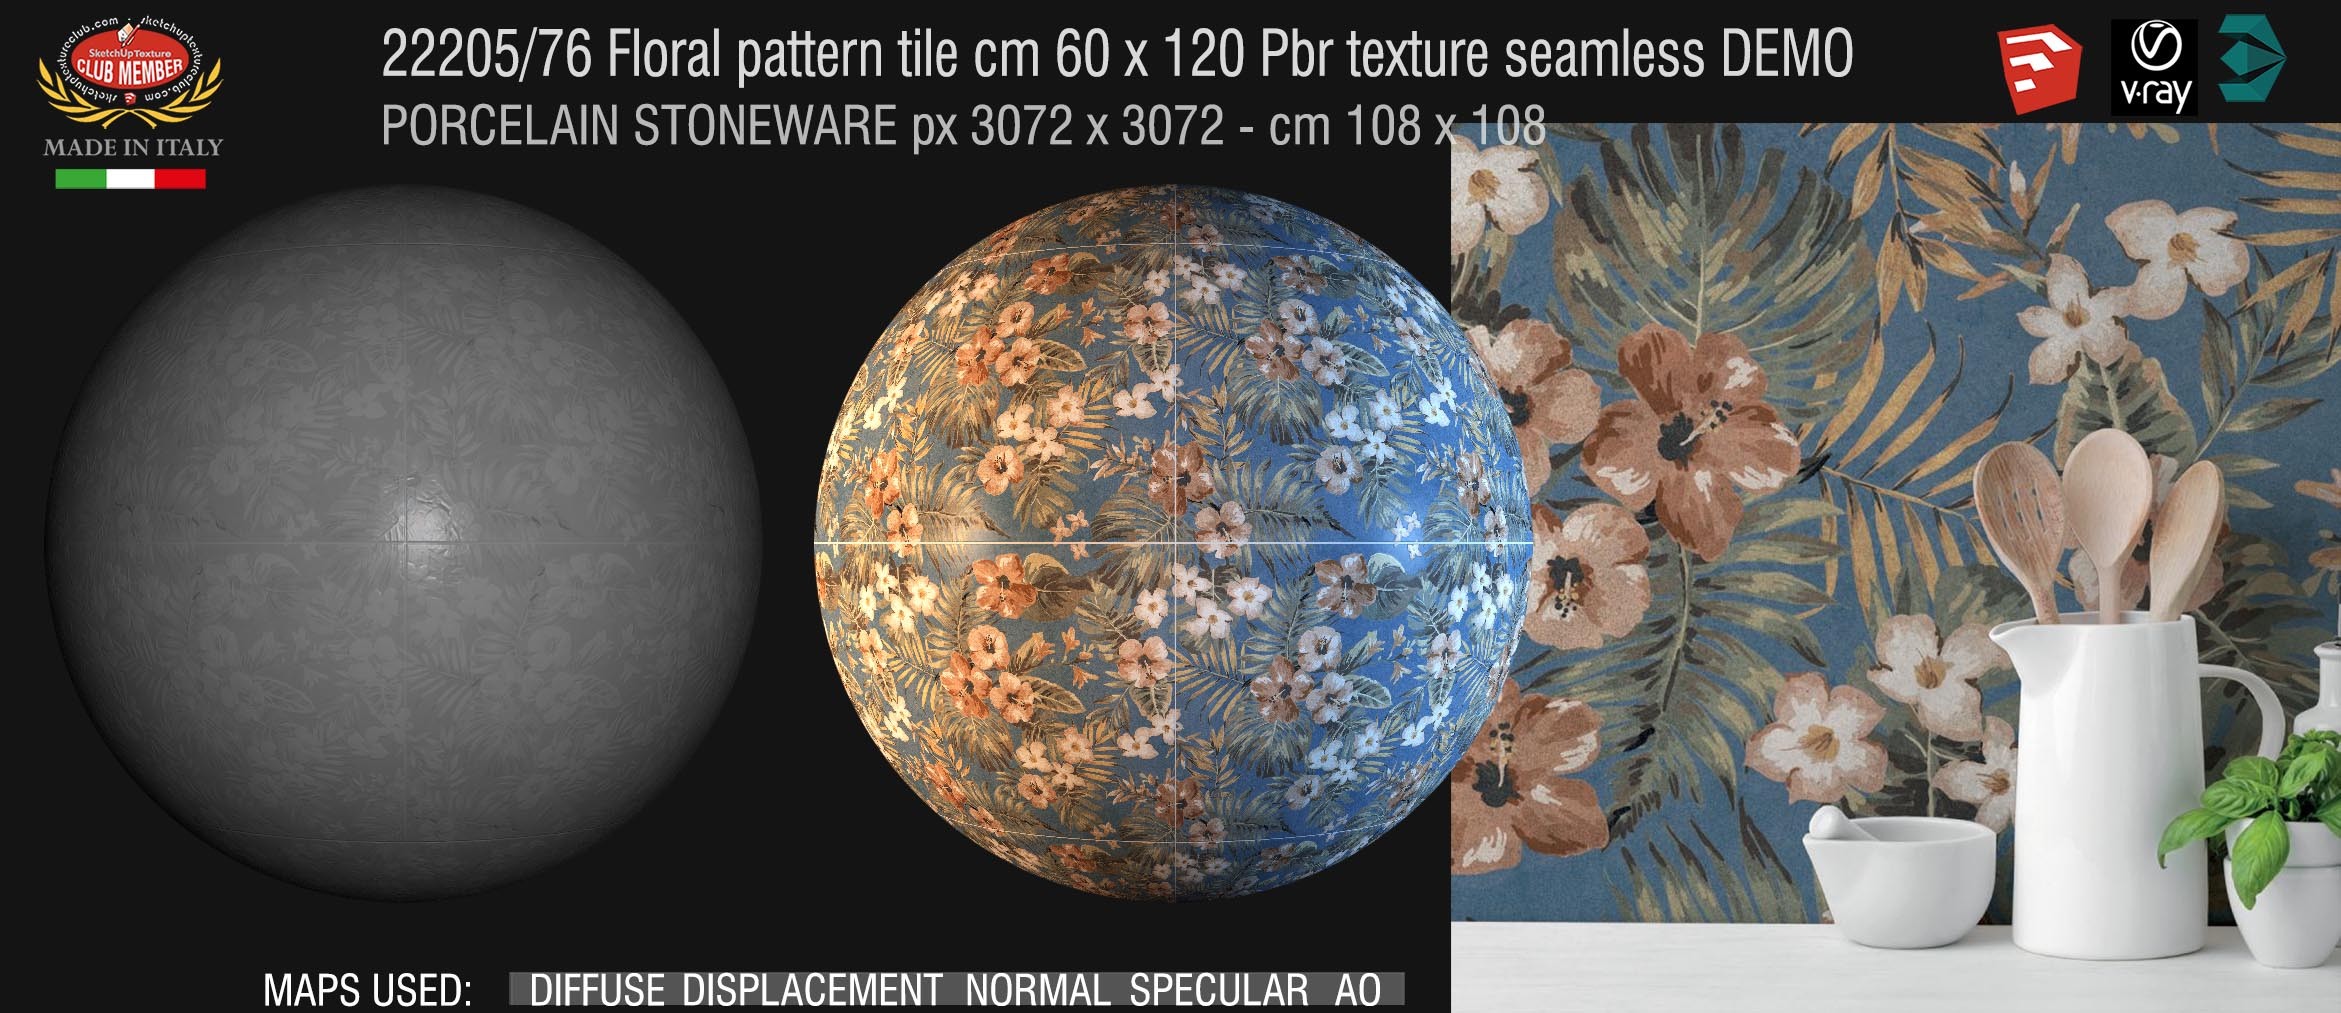 22205/76 PORCELAIN STONEWARE floral pattern tile cm 60 x 120 Pbr texture seamless DEMO